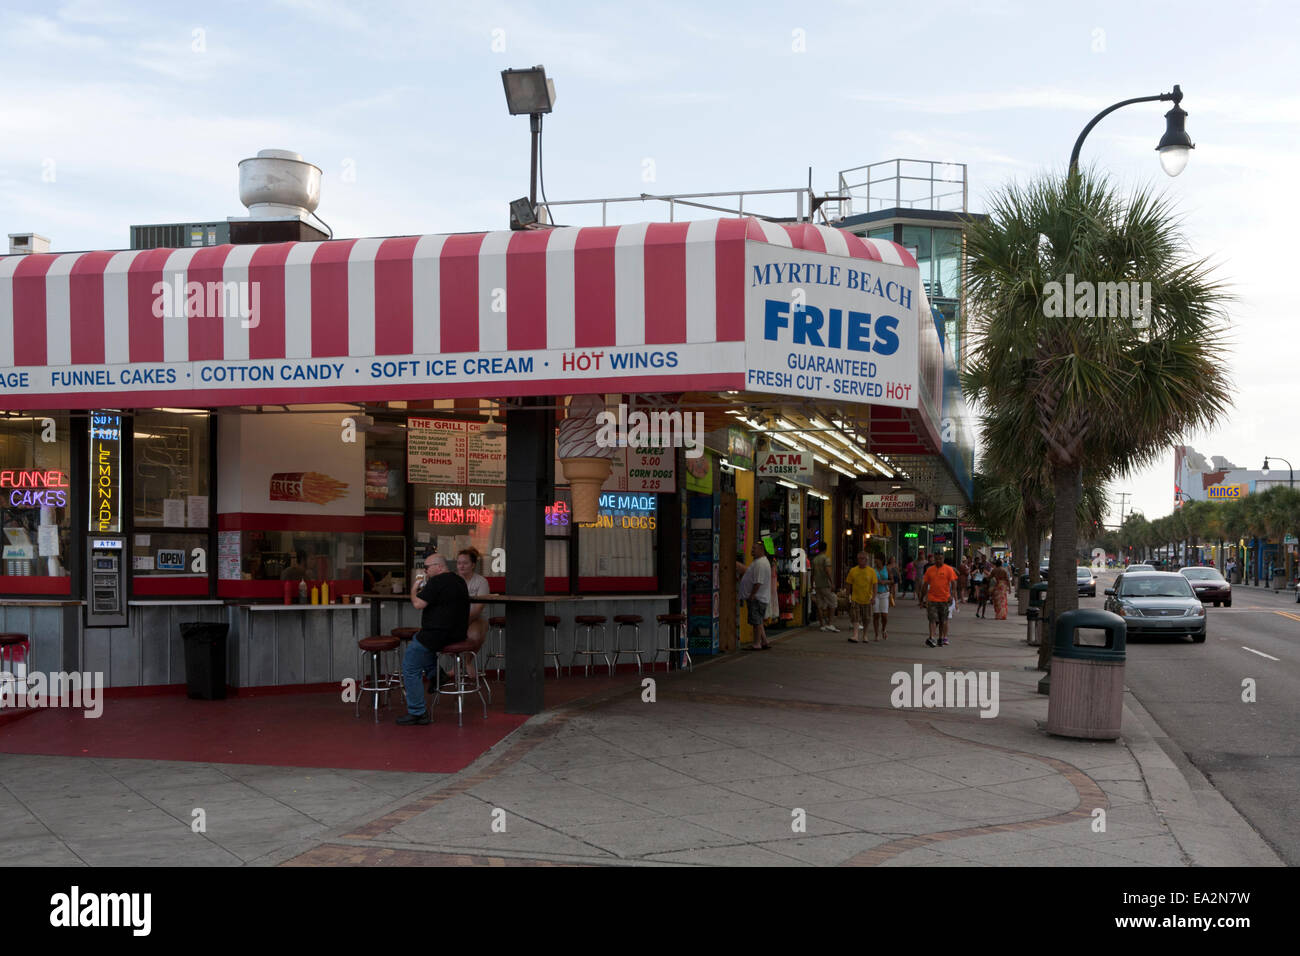 Myrtle Beach Fries eatery. Stock Photo